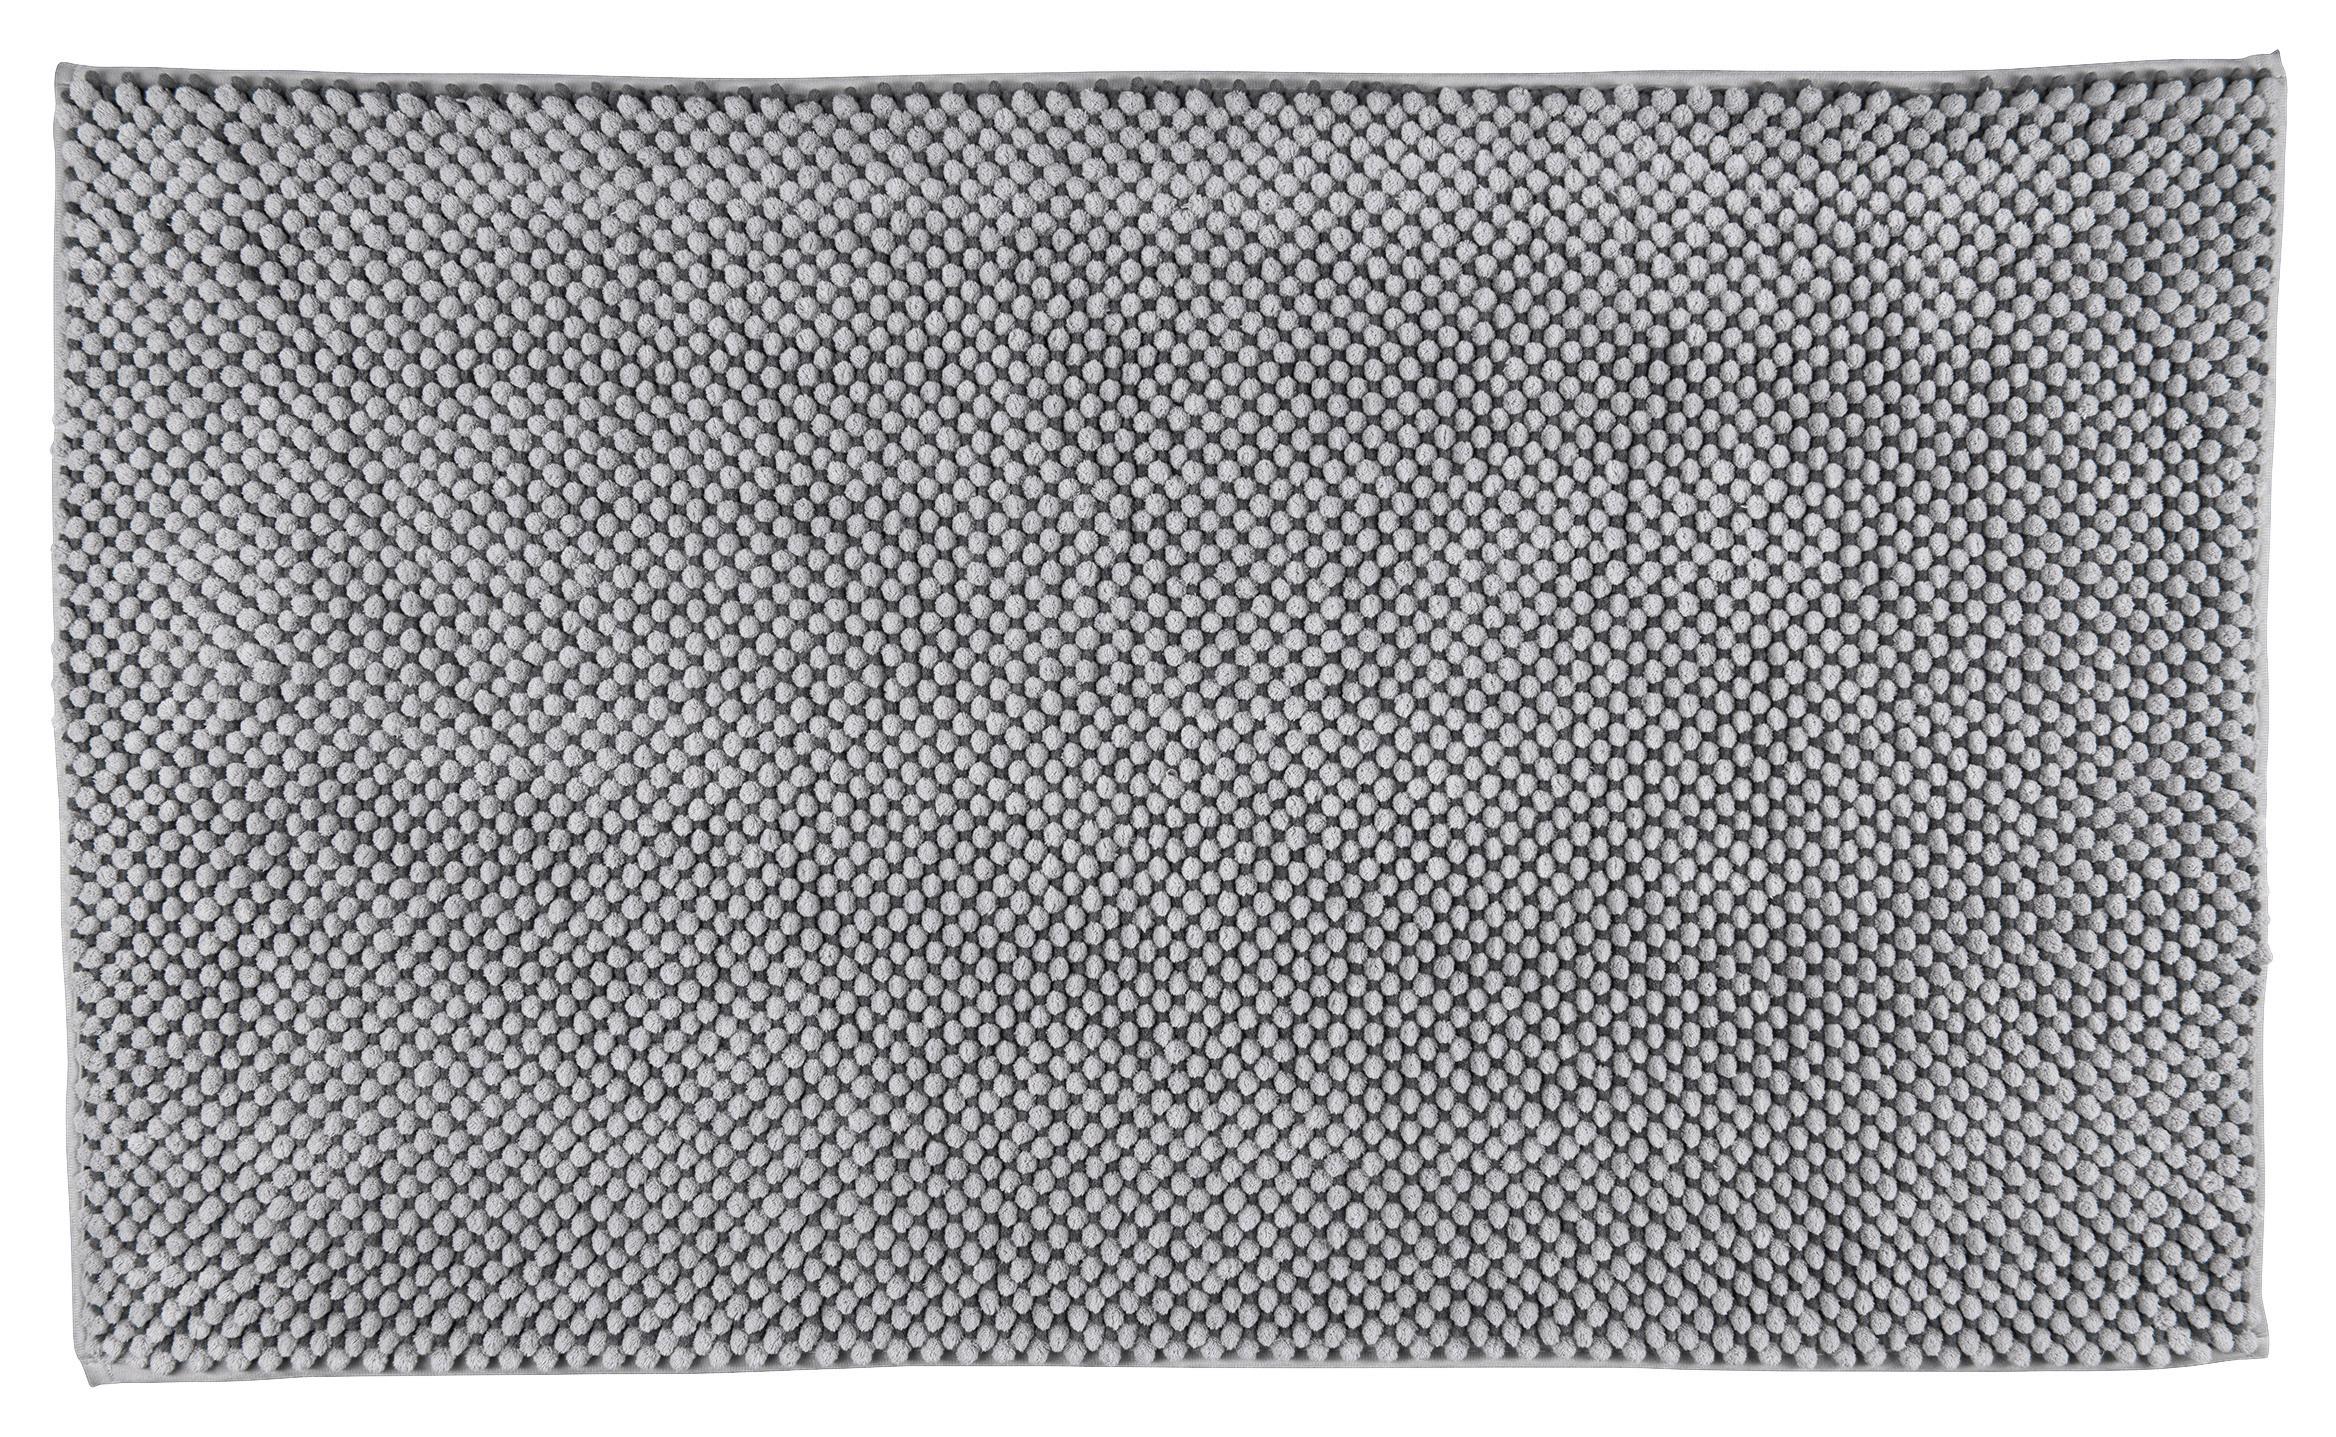 Badematte Usedom Grau/Silber 60x100 cm Rutschhemmend - Silberfarben/Grau, MODERN, Textil (60/100cm) - Luca Bessoni